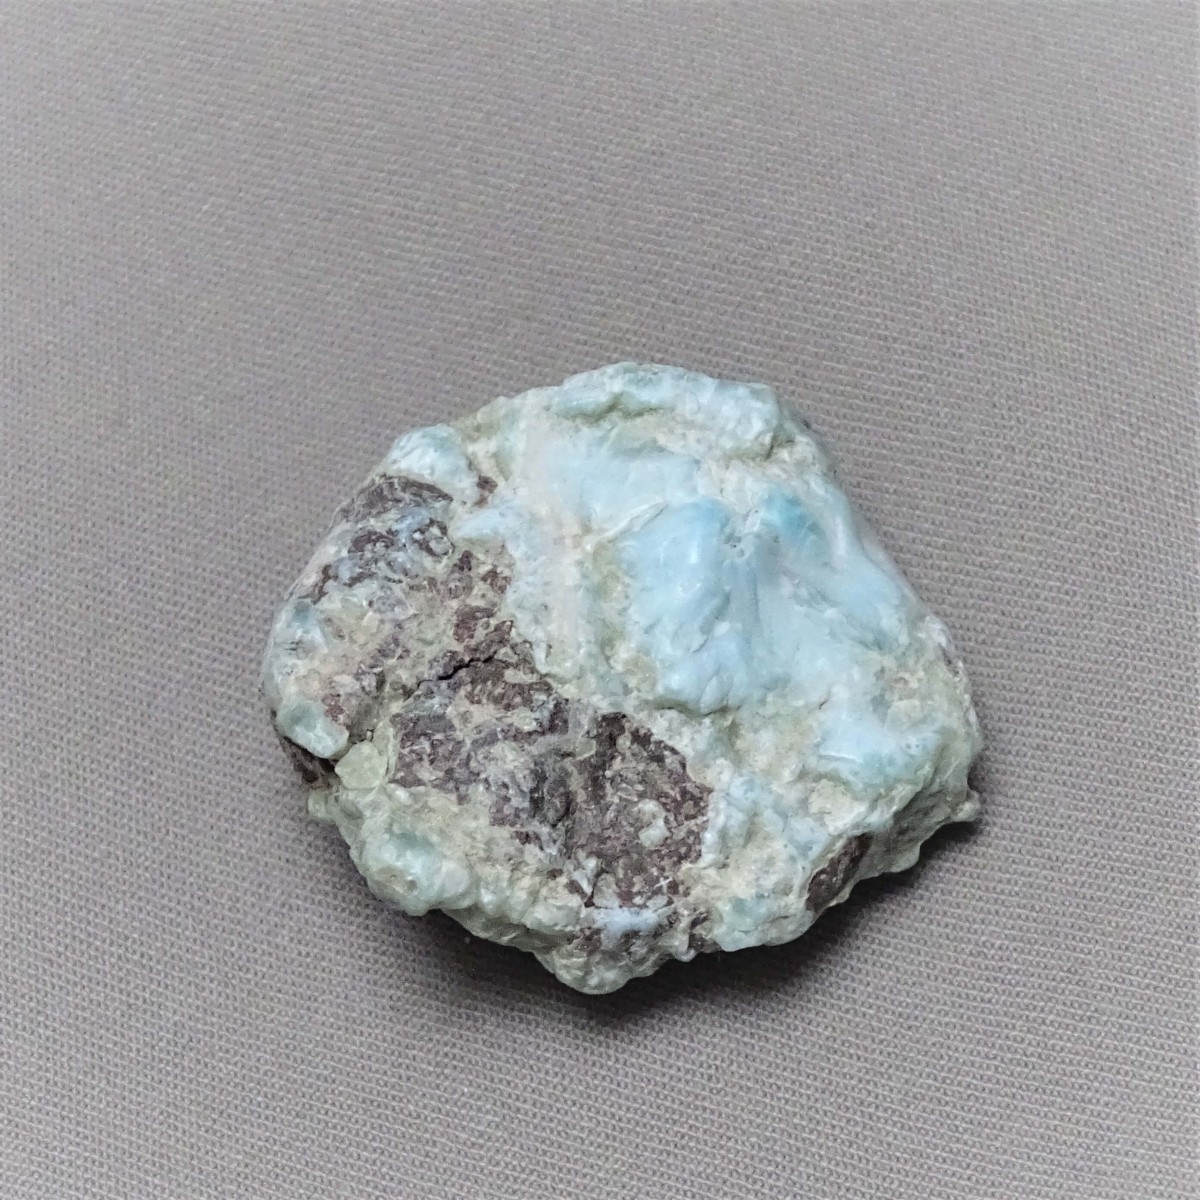 Larimar raw natural mineral 23.4g, Dominican Republic